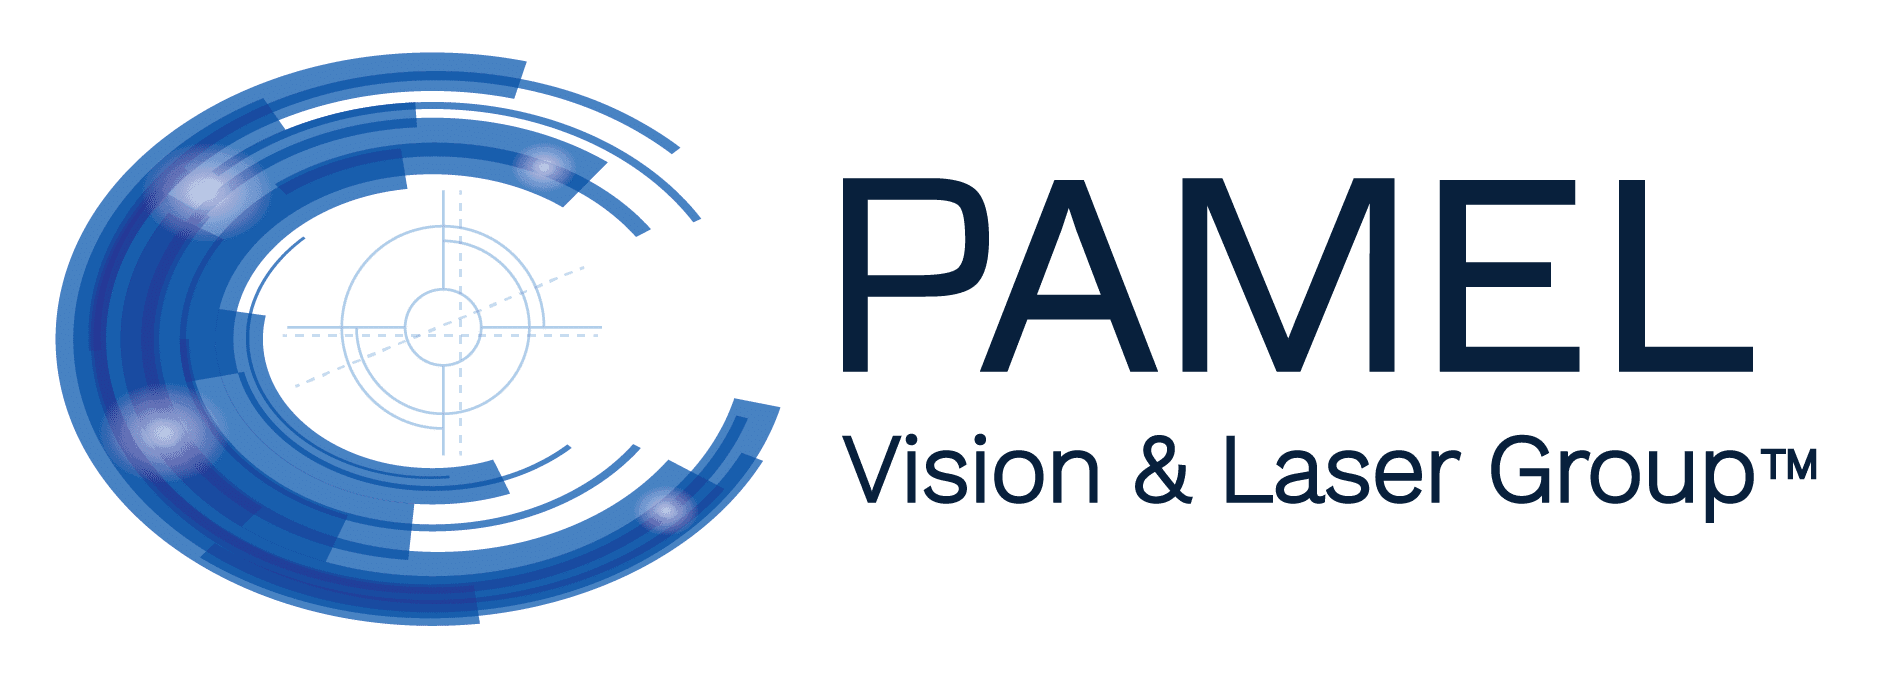 Pamel Vision & Laser Group Logo – New York